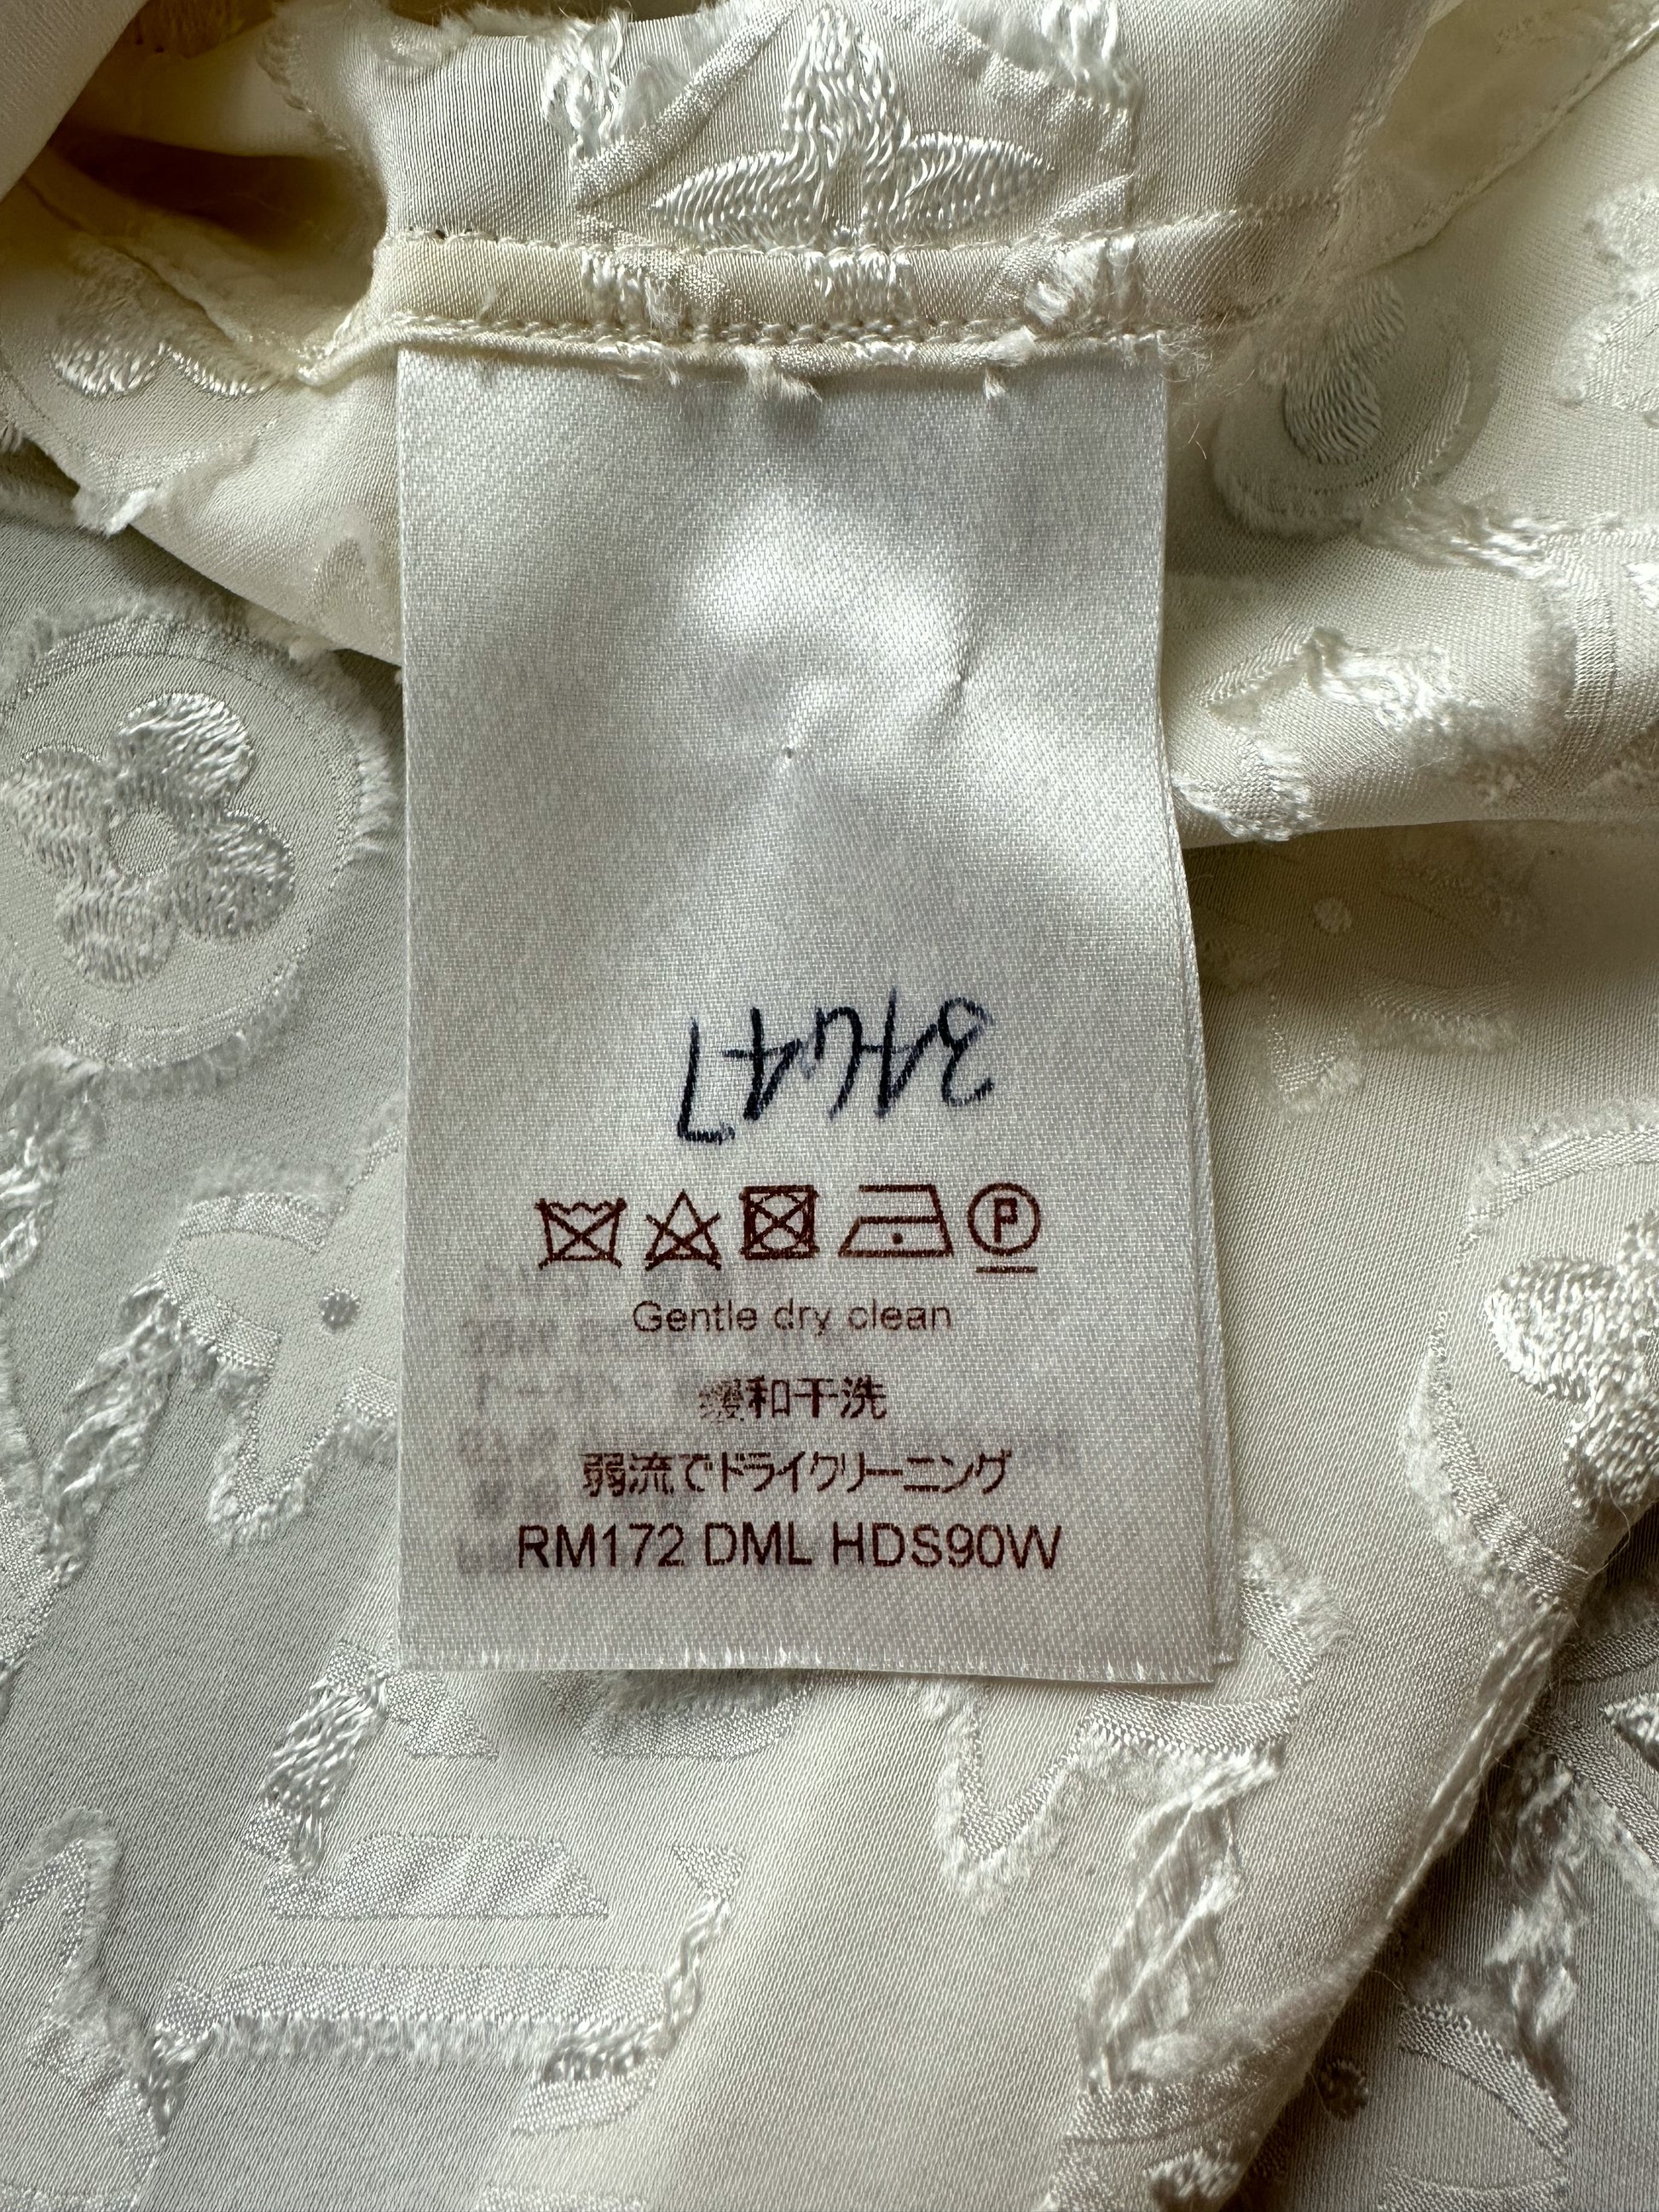 Louis Vuitton Inverted Mahina Monogram Pajama Shirt Navy. Size 42